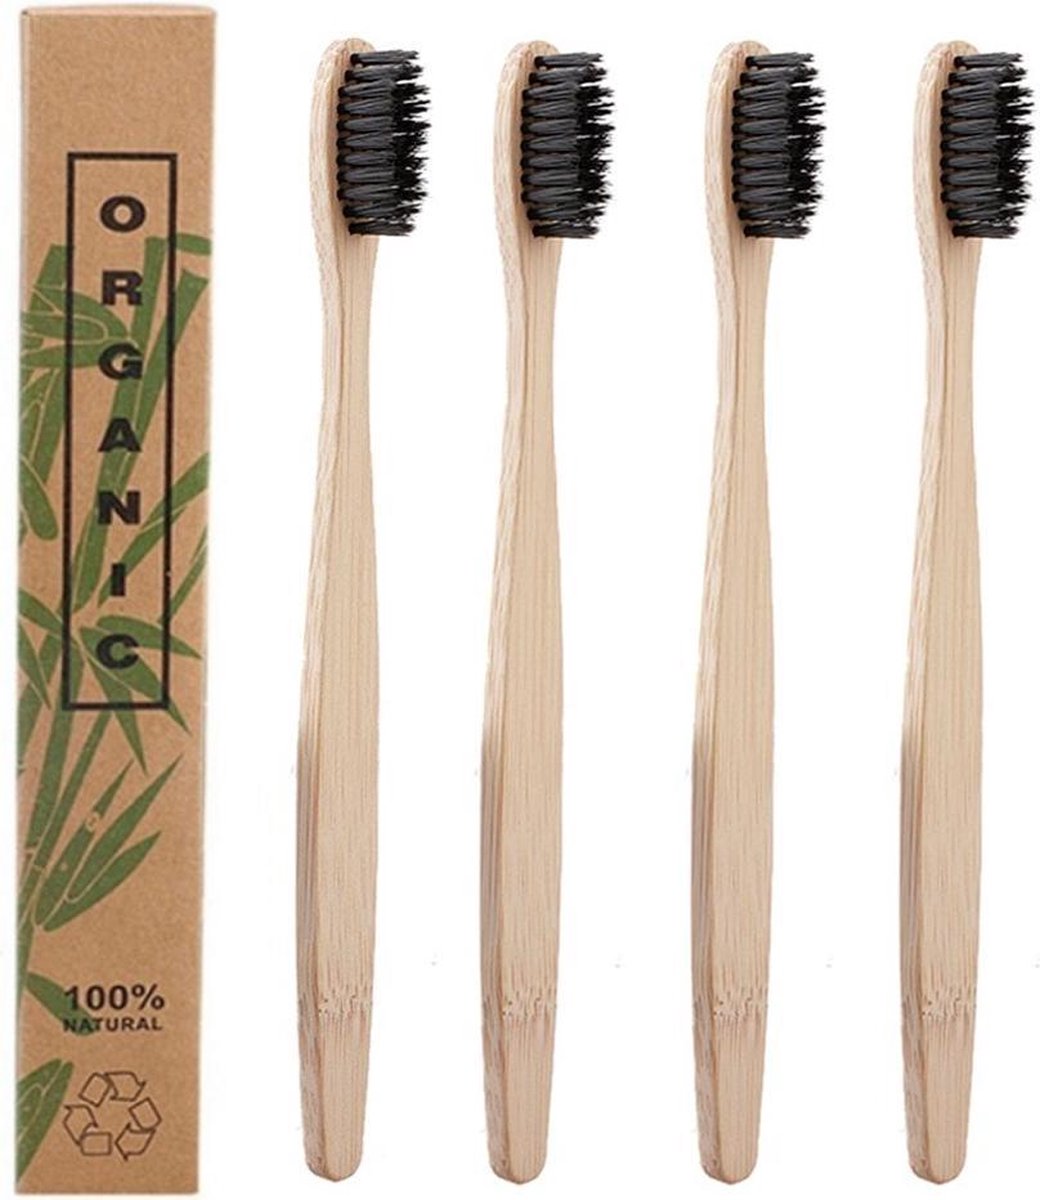 Bamboe Tandenborstels |Set Van 4 Tandenborstels | Medium soft | Biologisch Afbreekbaar | Zwart